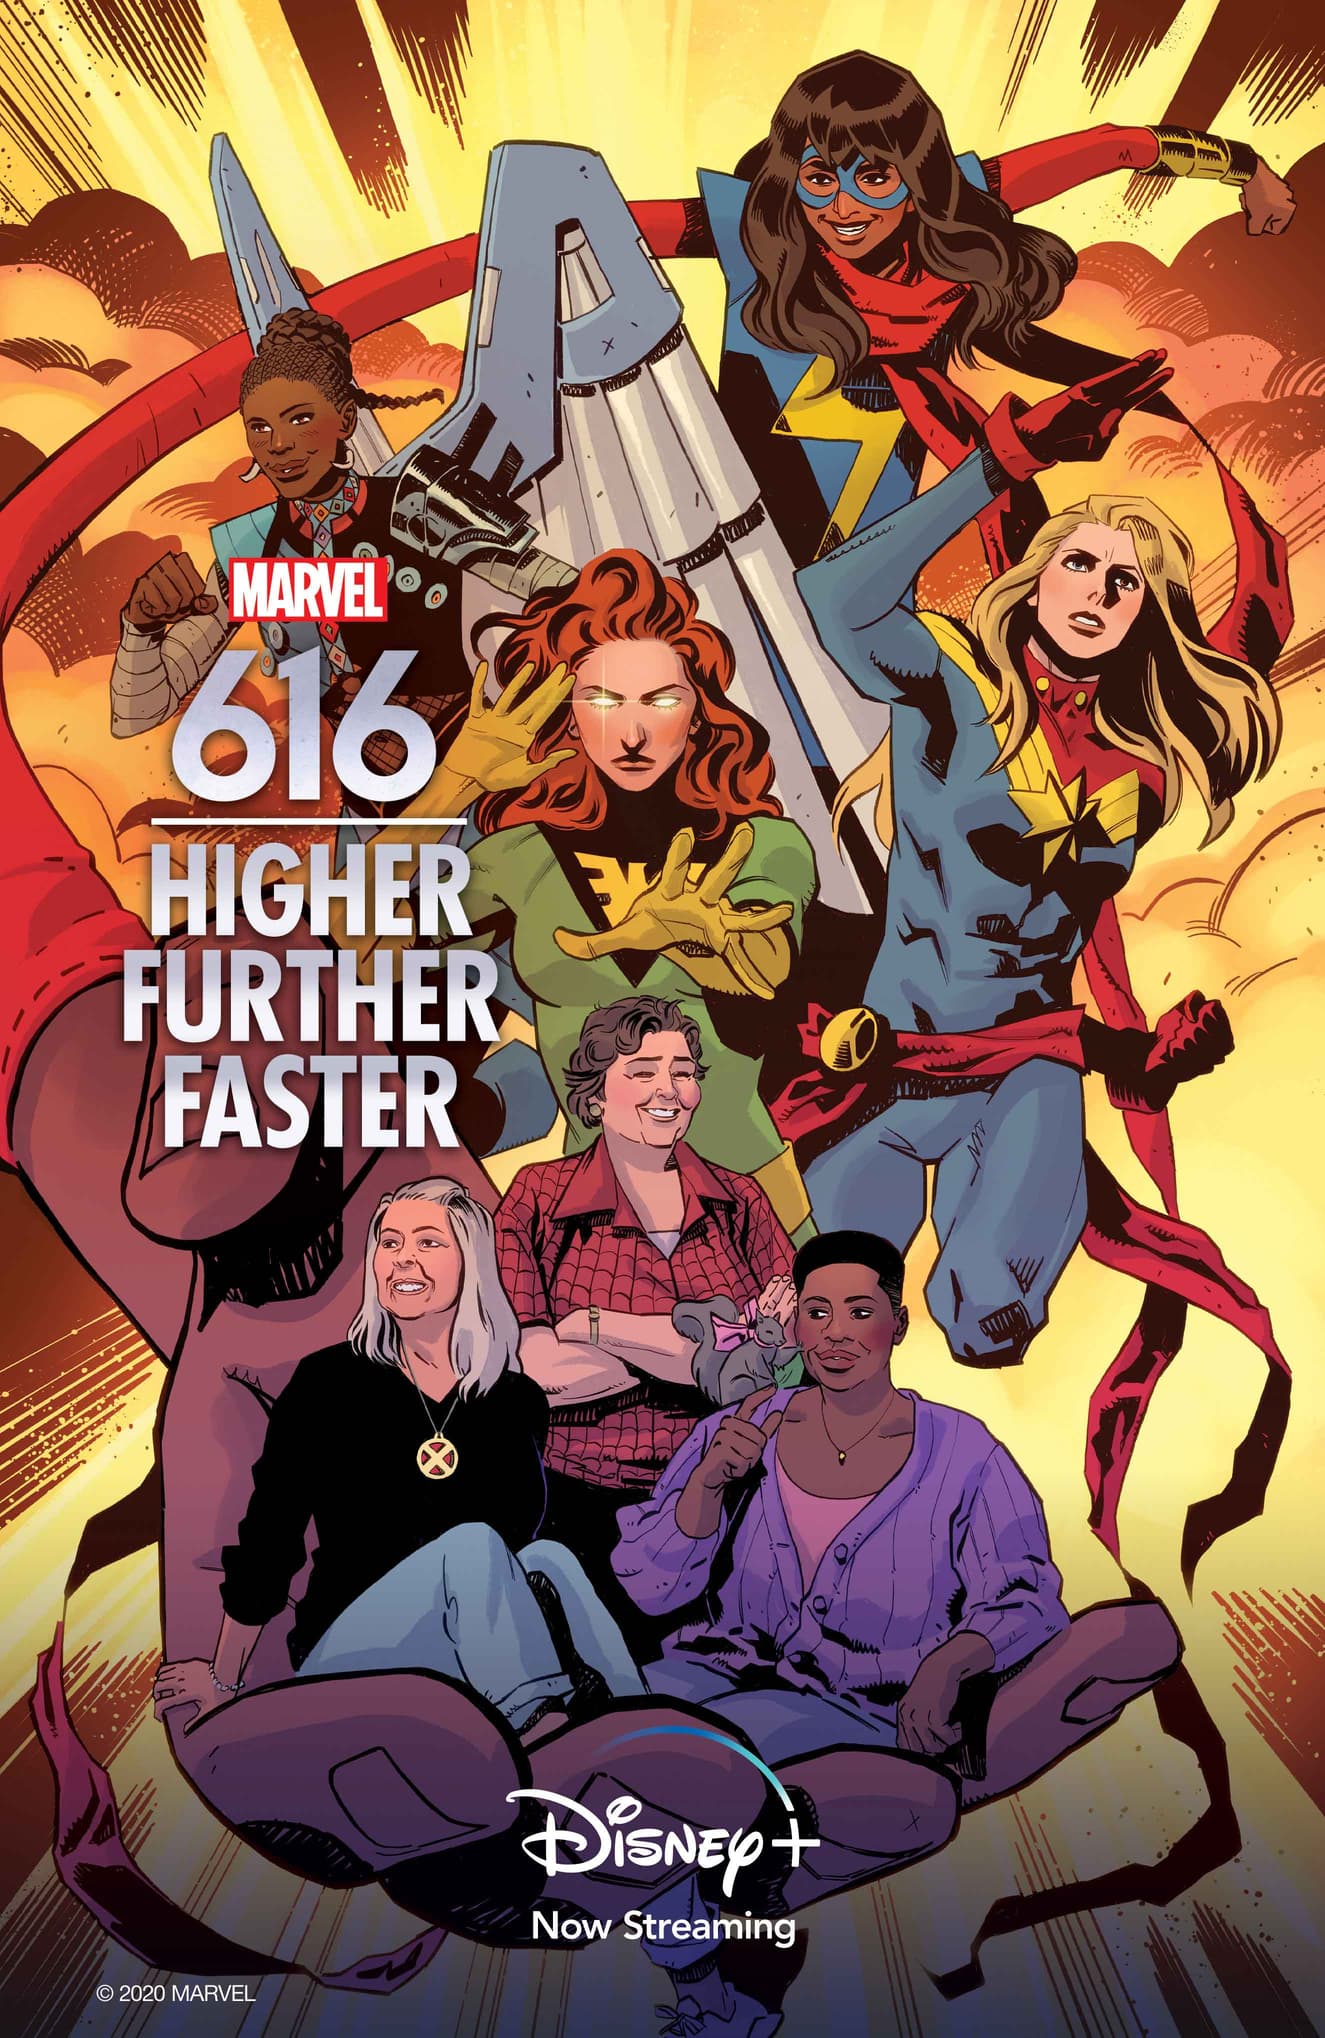 Marvel's 616 Higher Further Faster